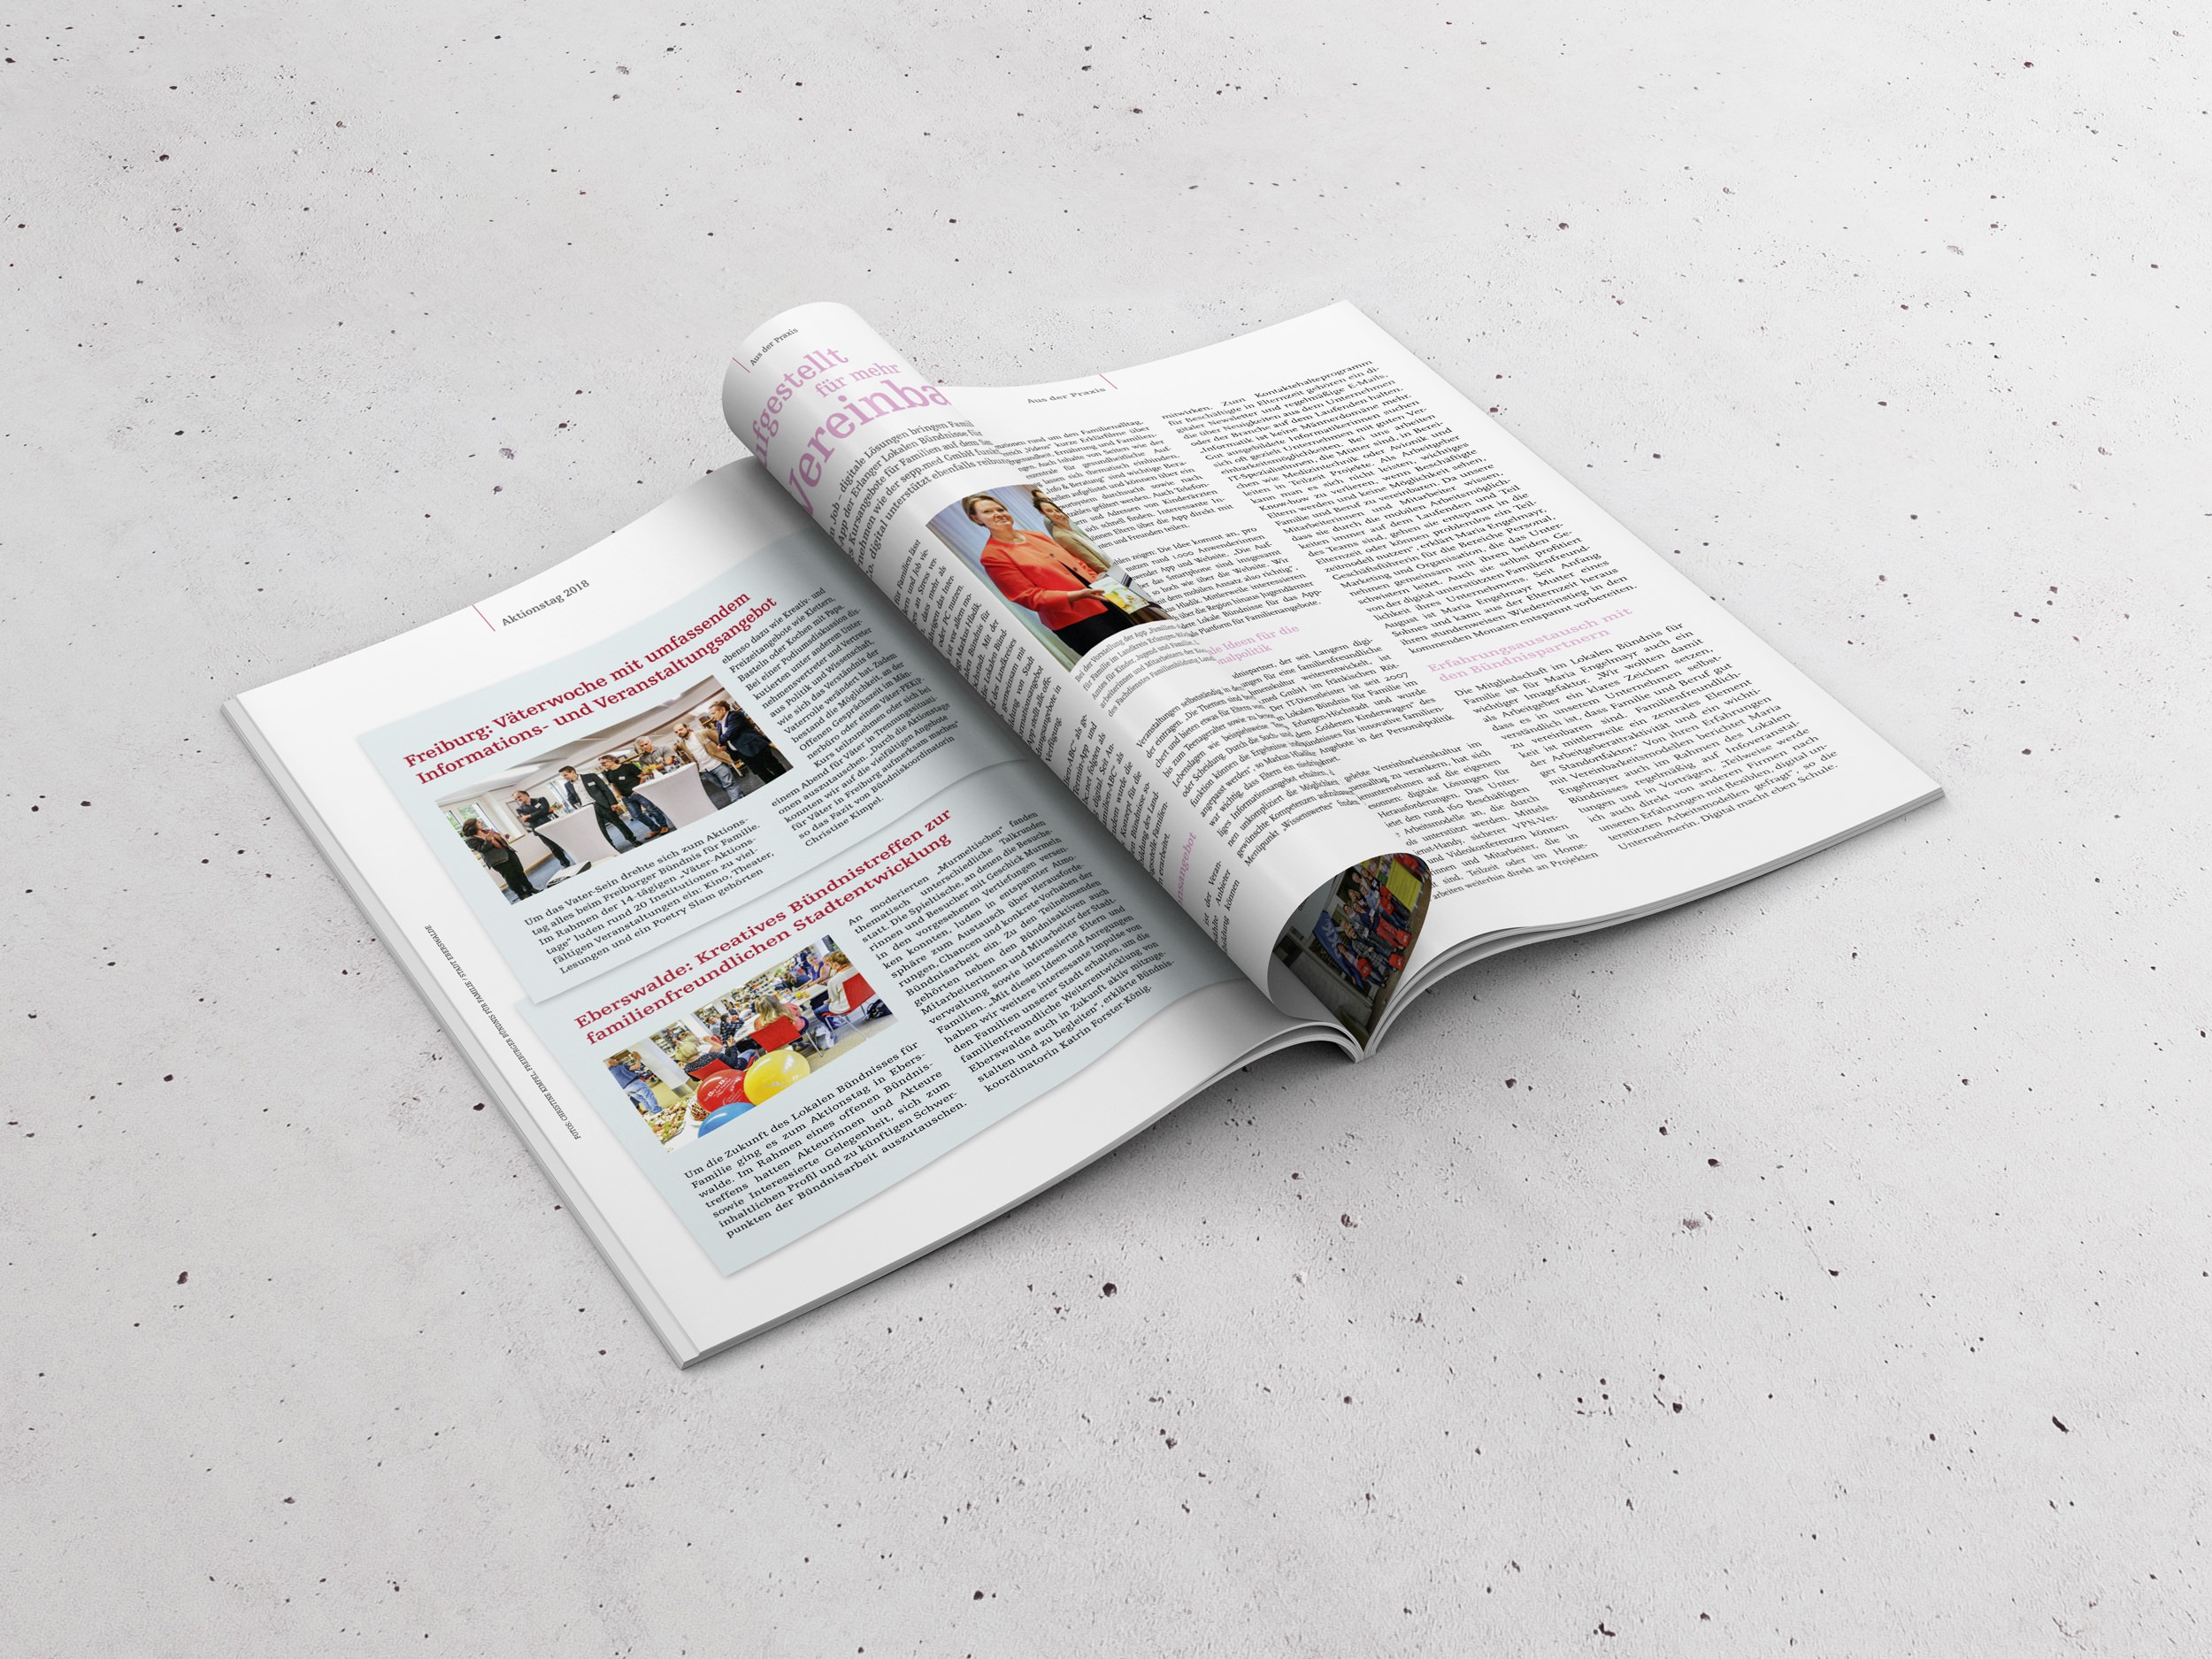 BMFSFJ – Lokale Bündnisse für Familie – Magazin "Familie leben." | Editorial Design / Corporate Publishing